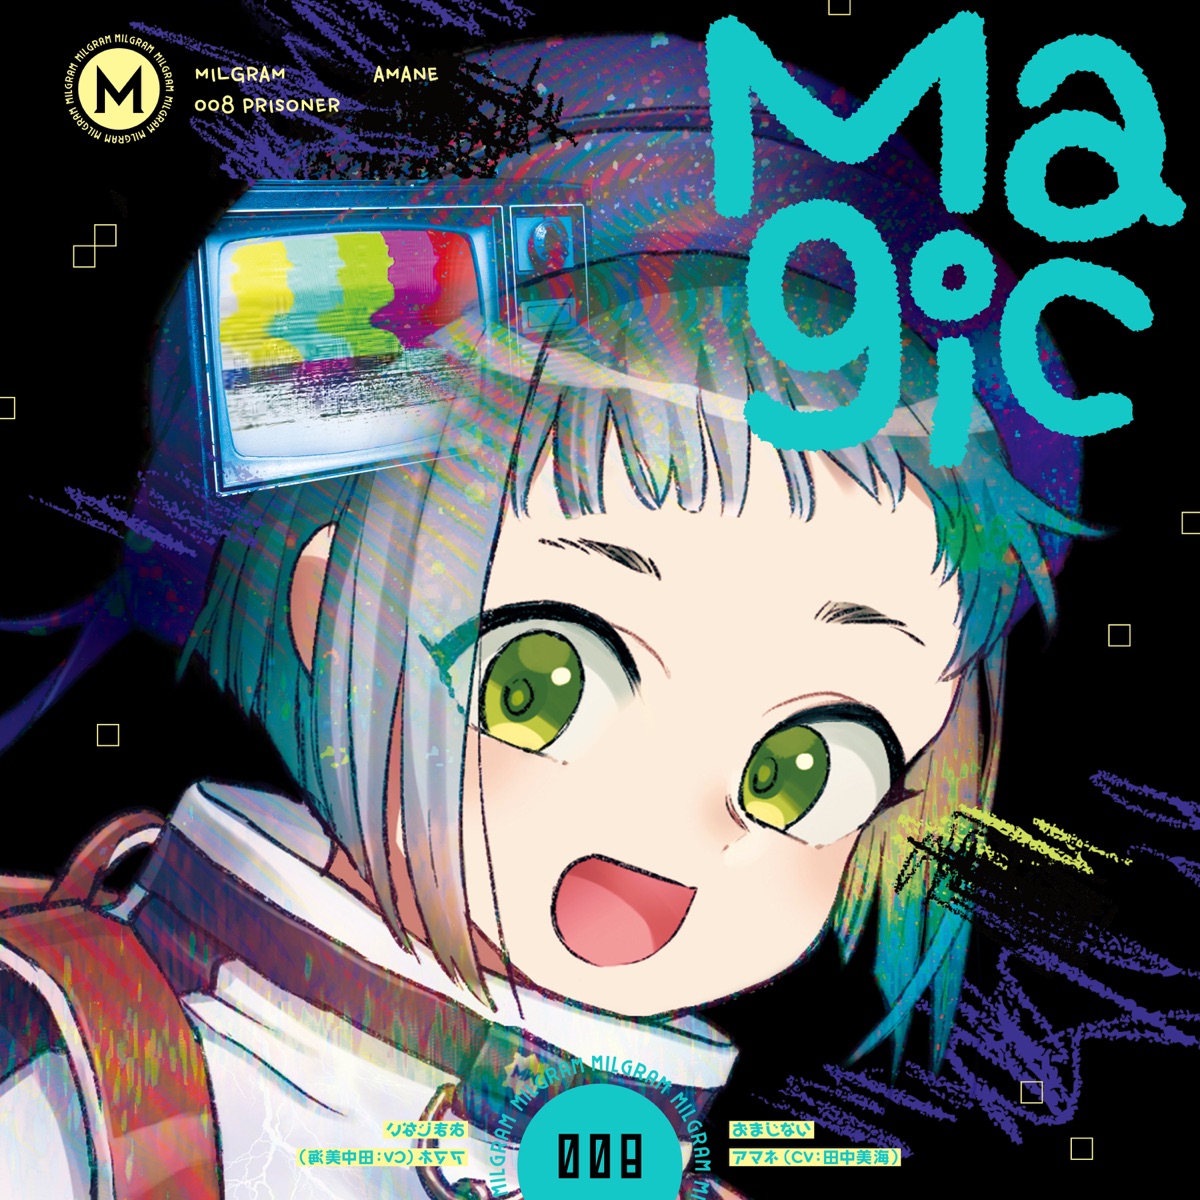 Cover art for『MILGRAM AMANE (Minami Tanaka) - ポジティブ・パレード -アマネ Cover-』from the release『Omajinai